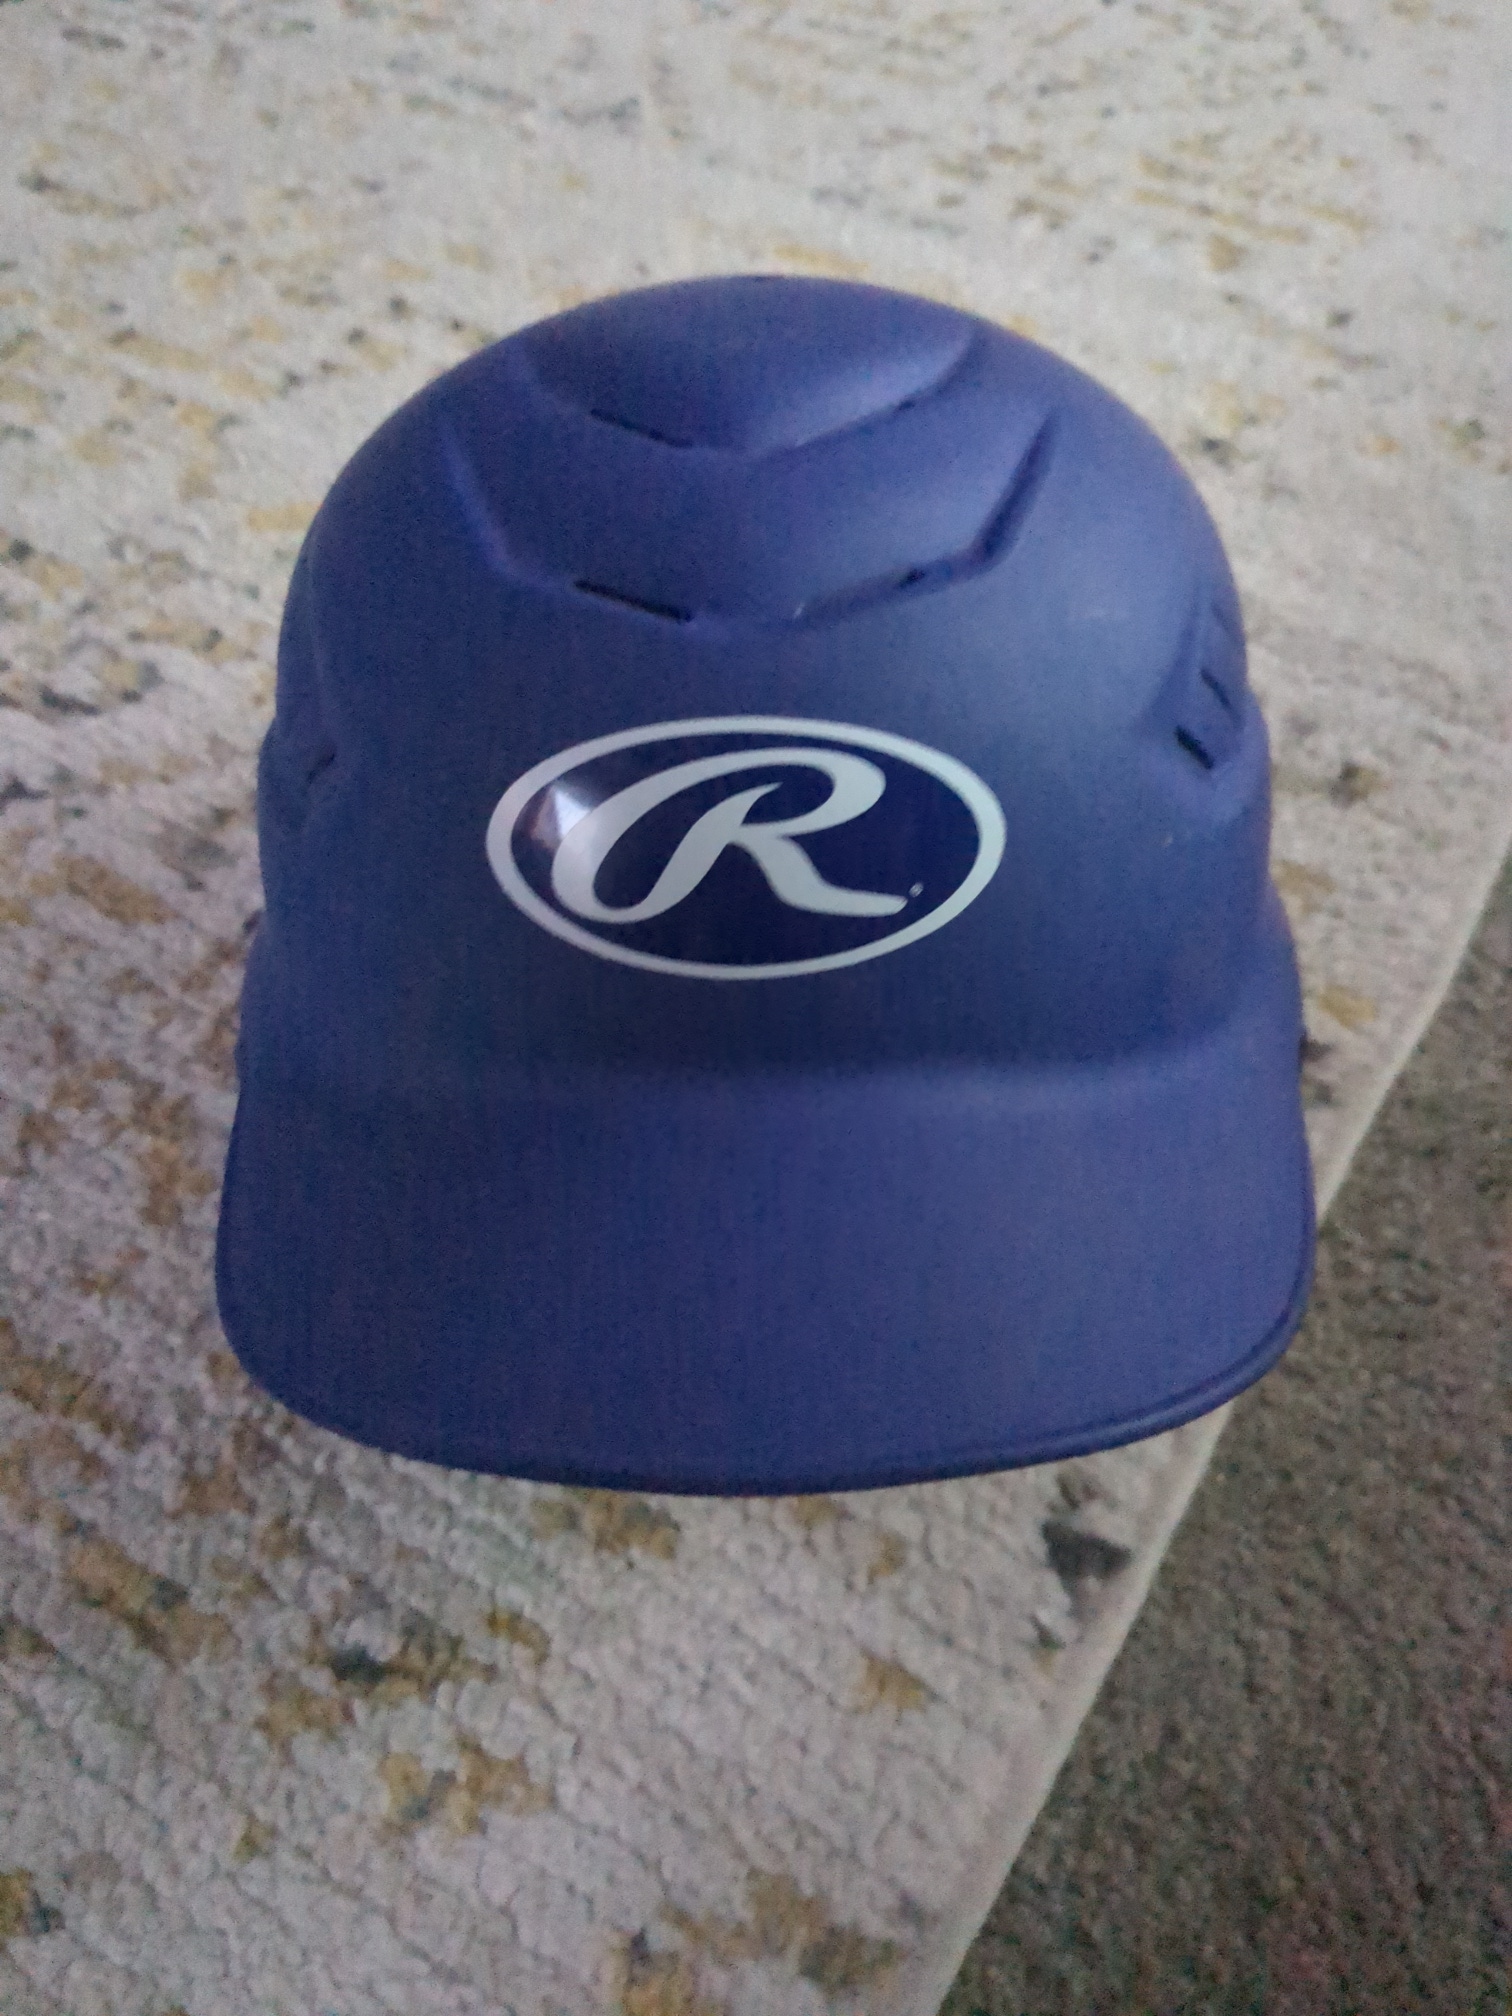 Used Rawlings Batting Helmet